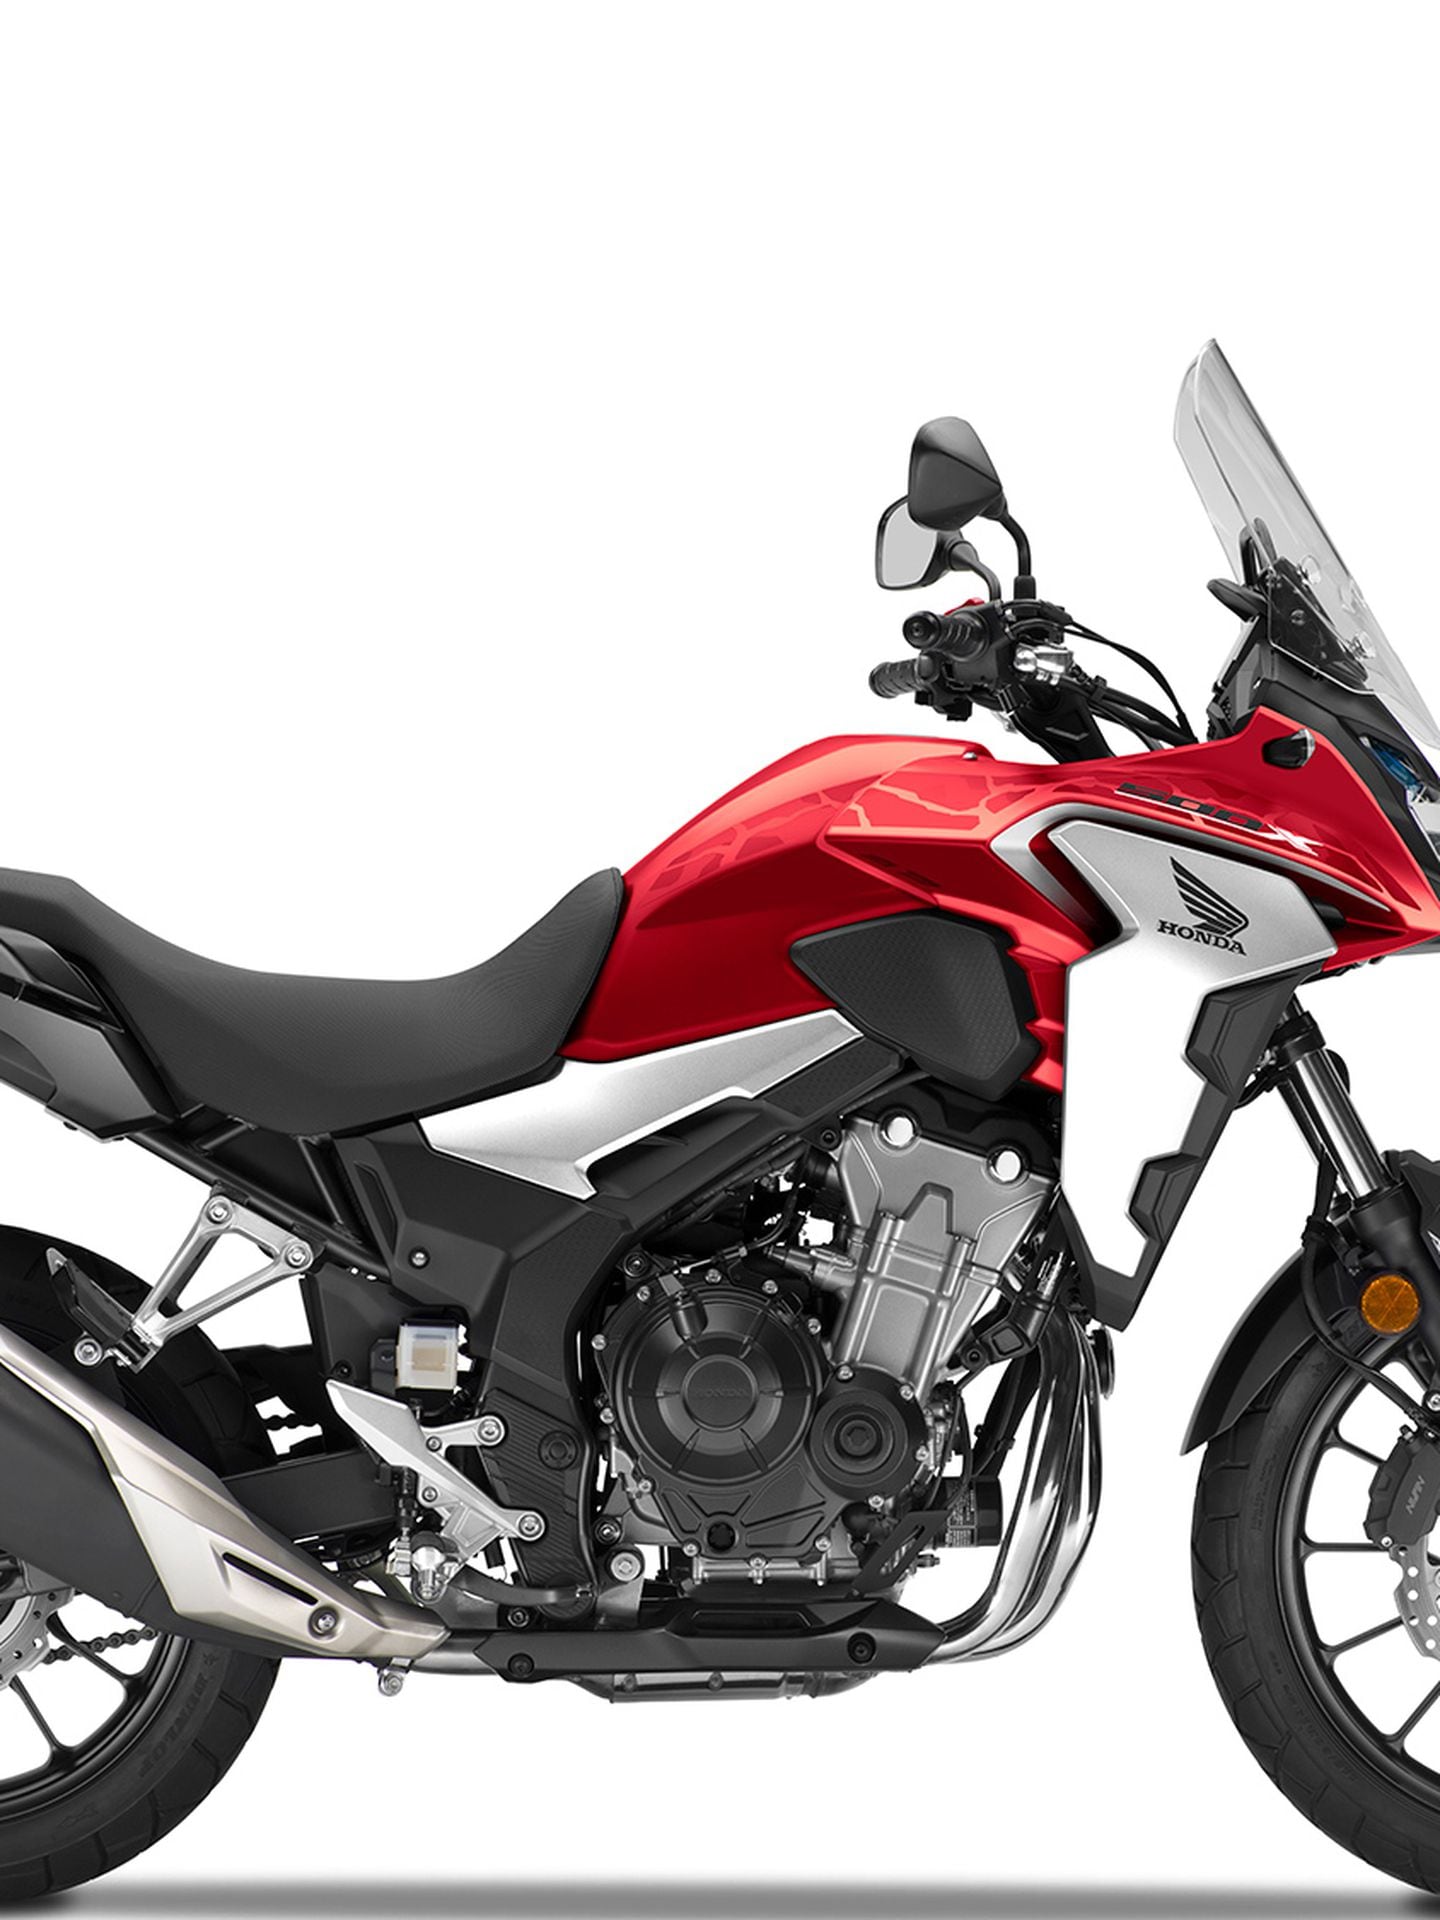 2020 Honda CB500X Buyer's Guide: Specs, Photos, Price